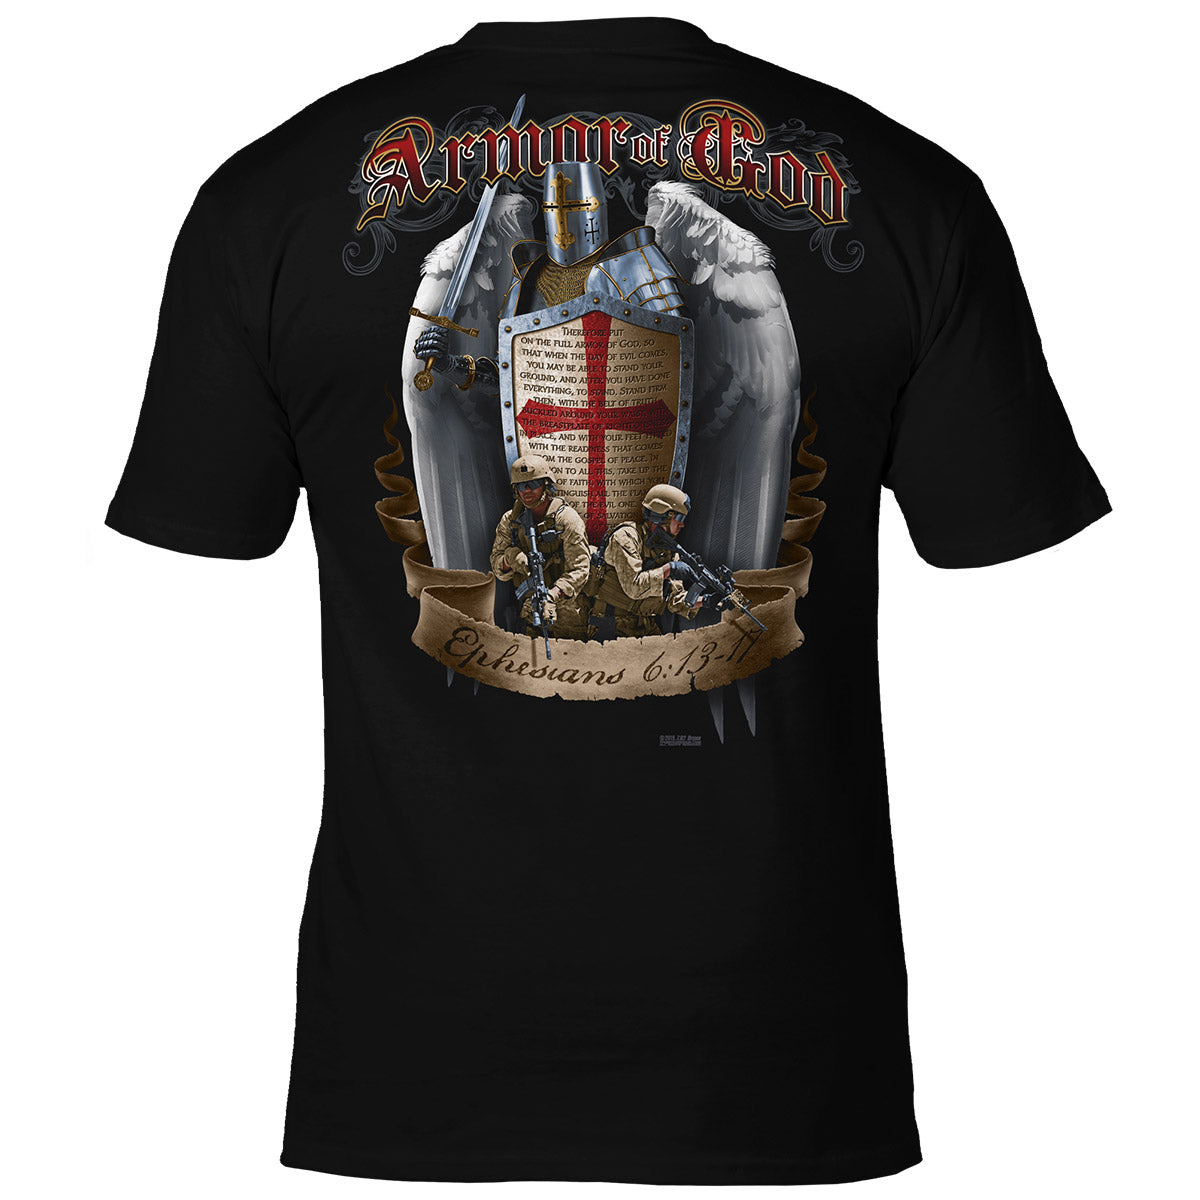 under god's armor t shirt